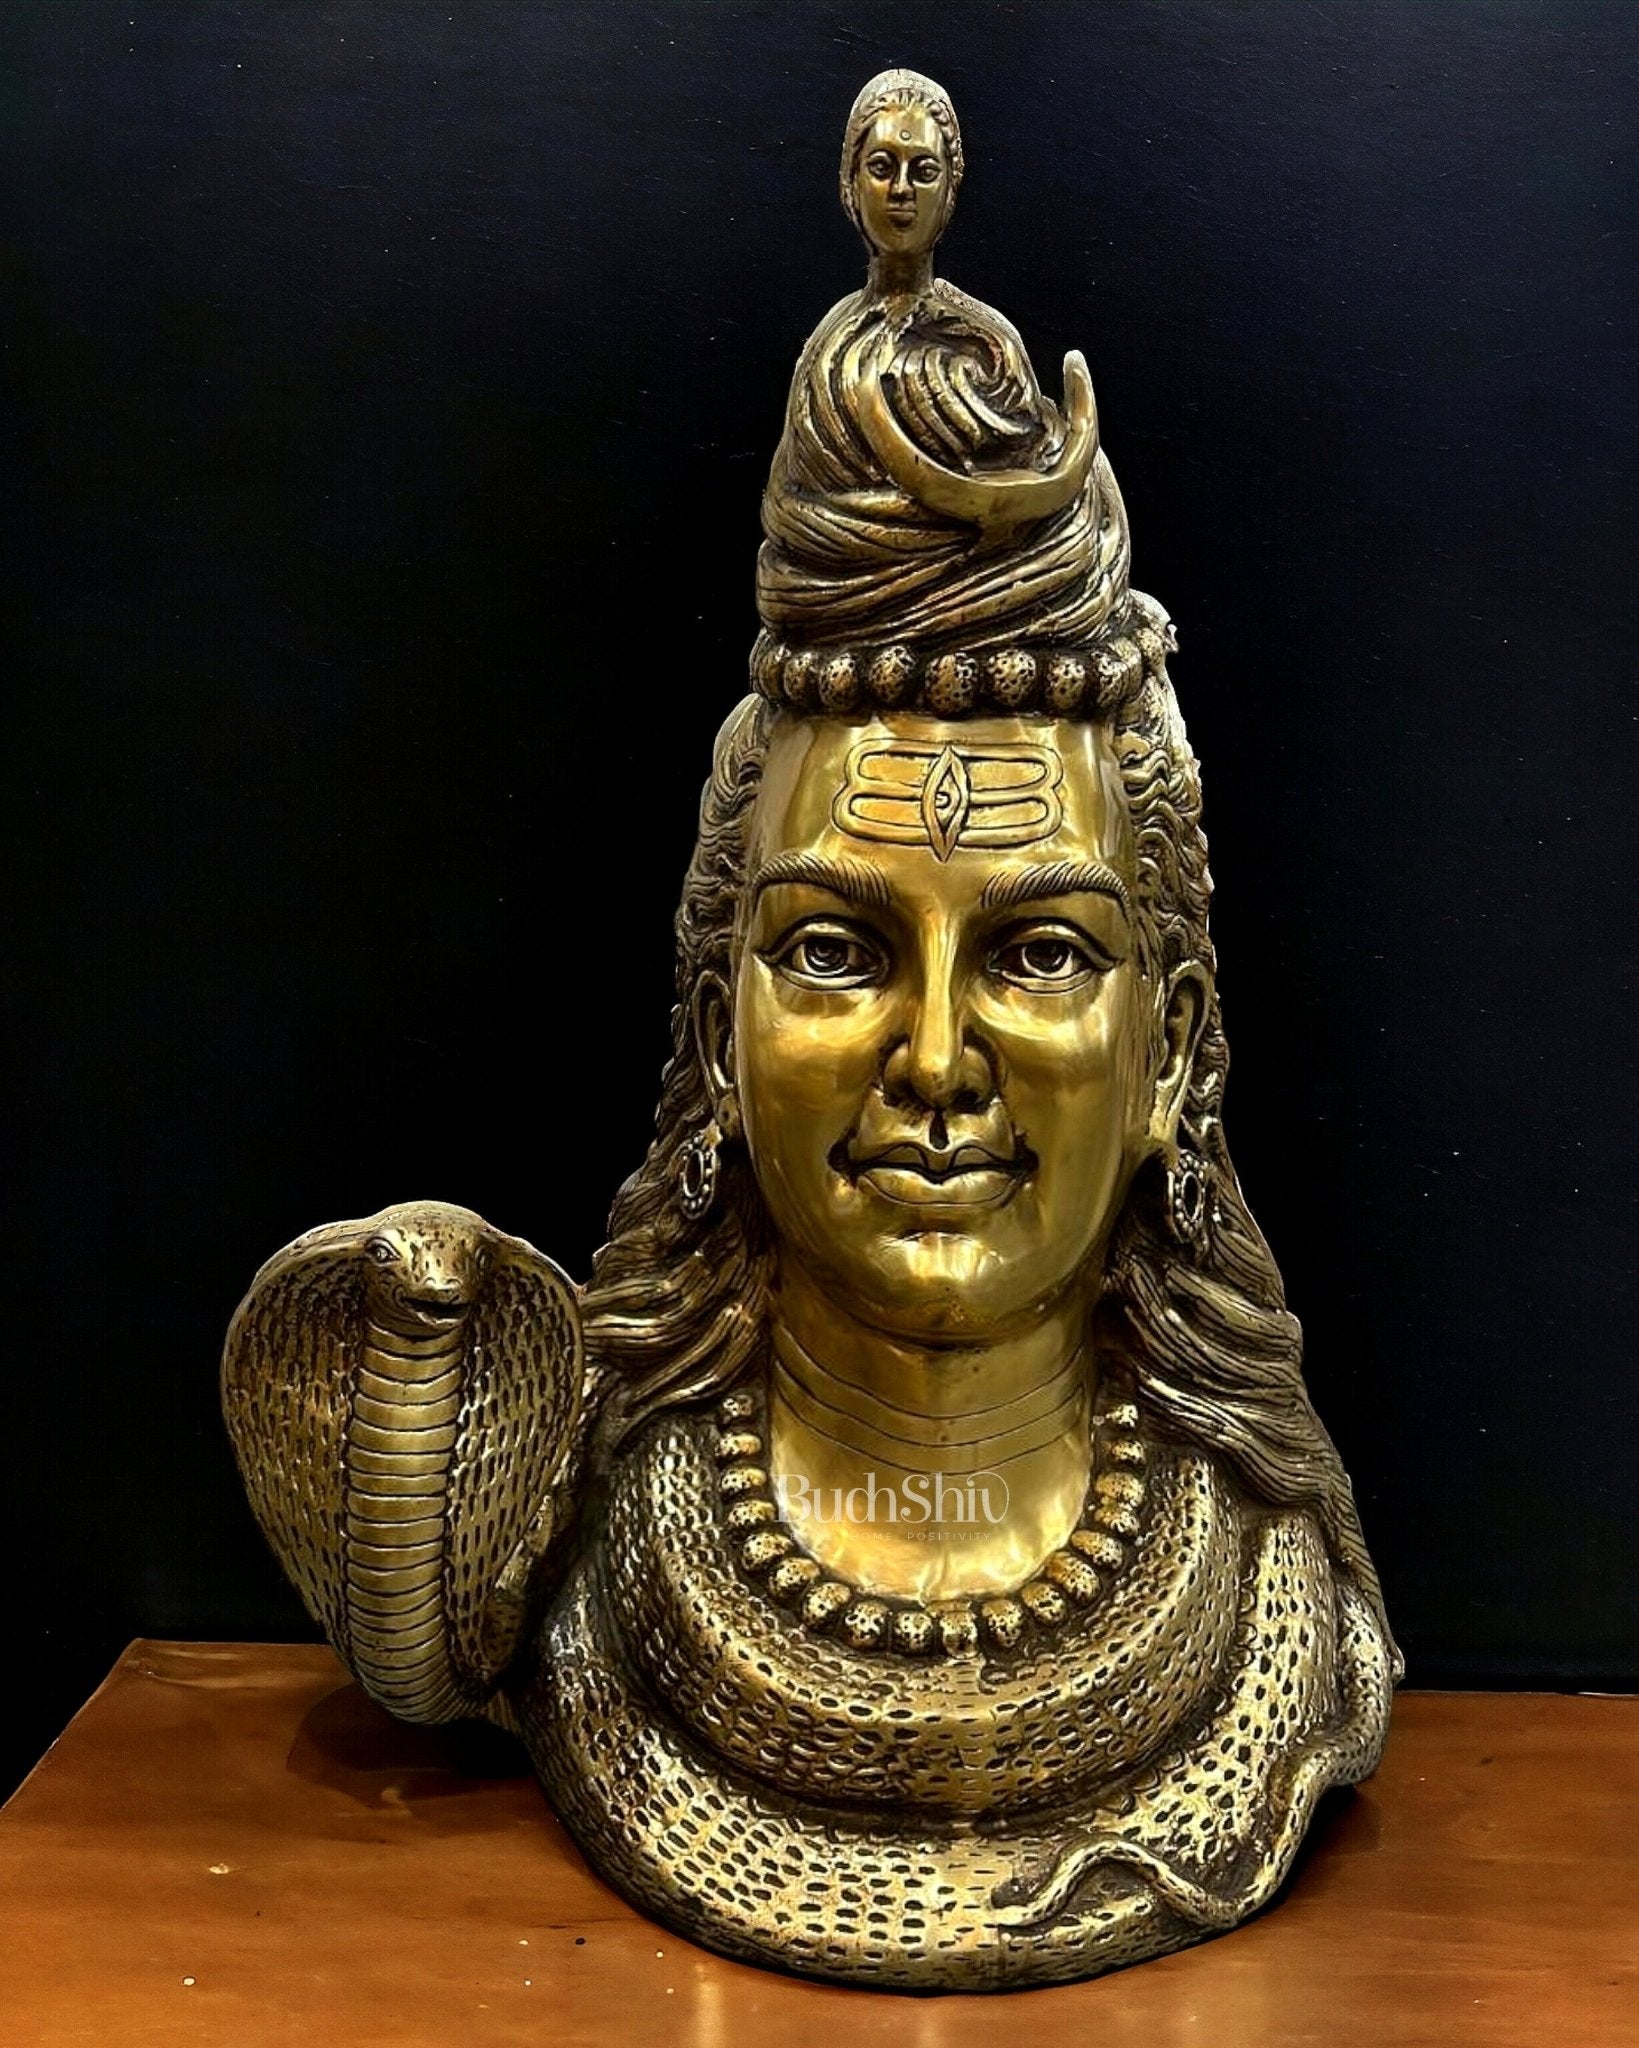 Large Brass Lord Shiva Head Bust - 27 inch - Budhshiv.com